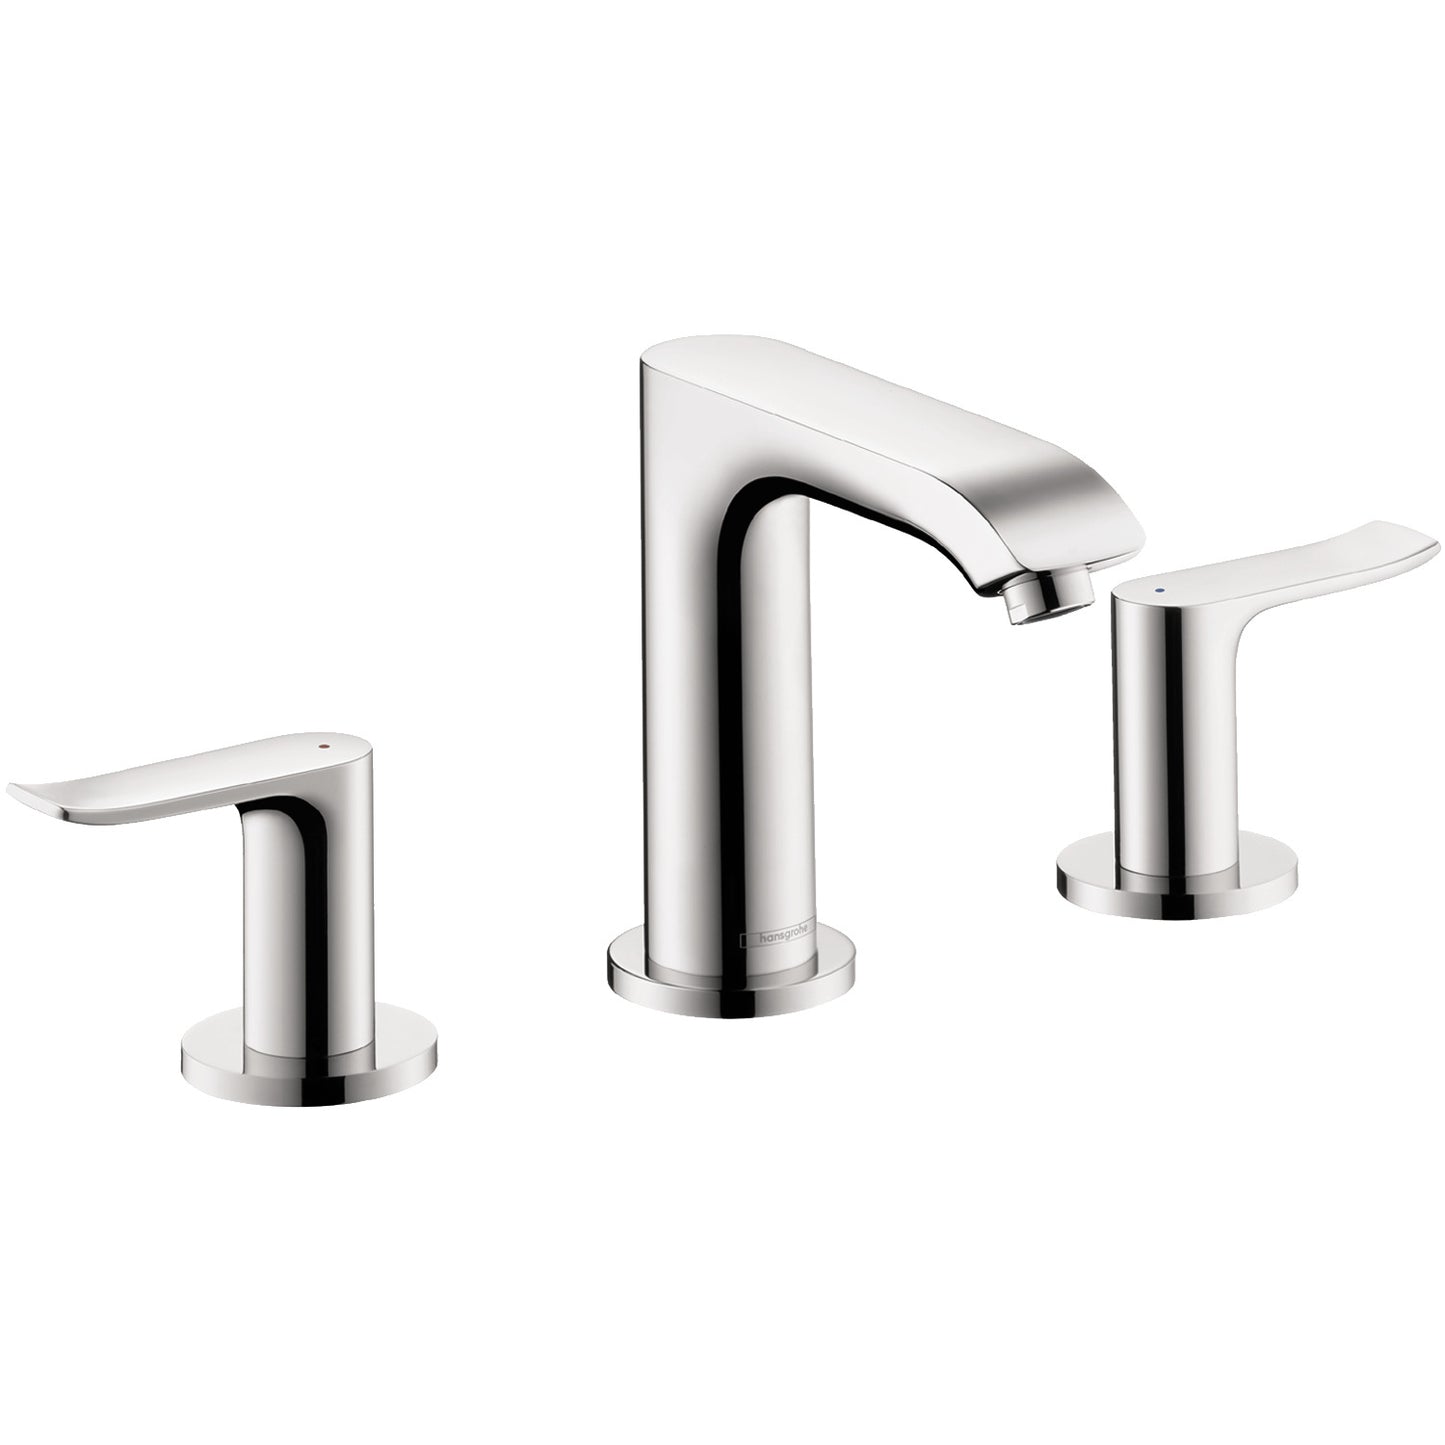 HANSGROHE 31124001 Chrome Metris Modern Widespread Bathroom Faucet 0.5 GPM